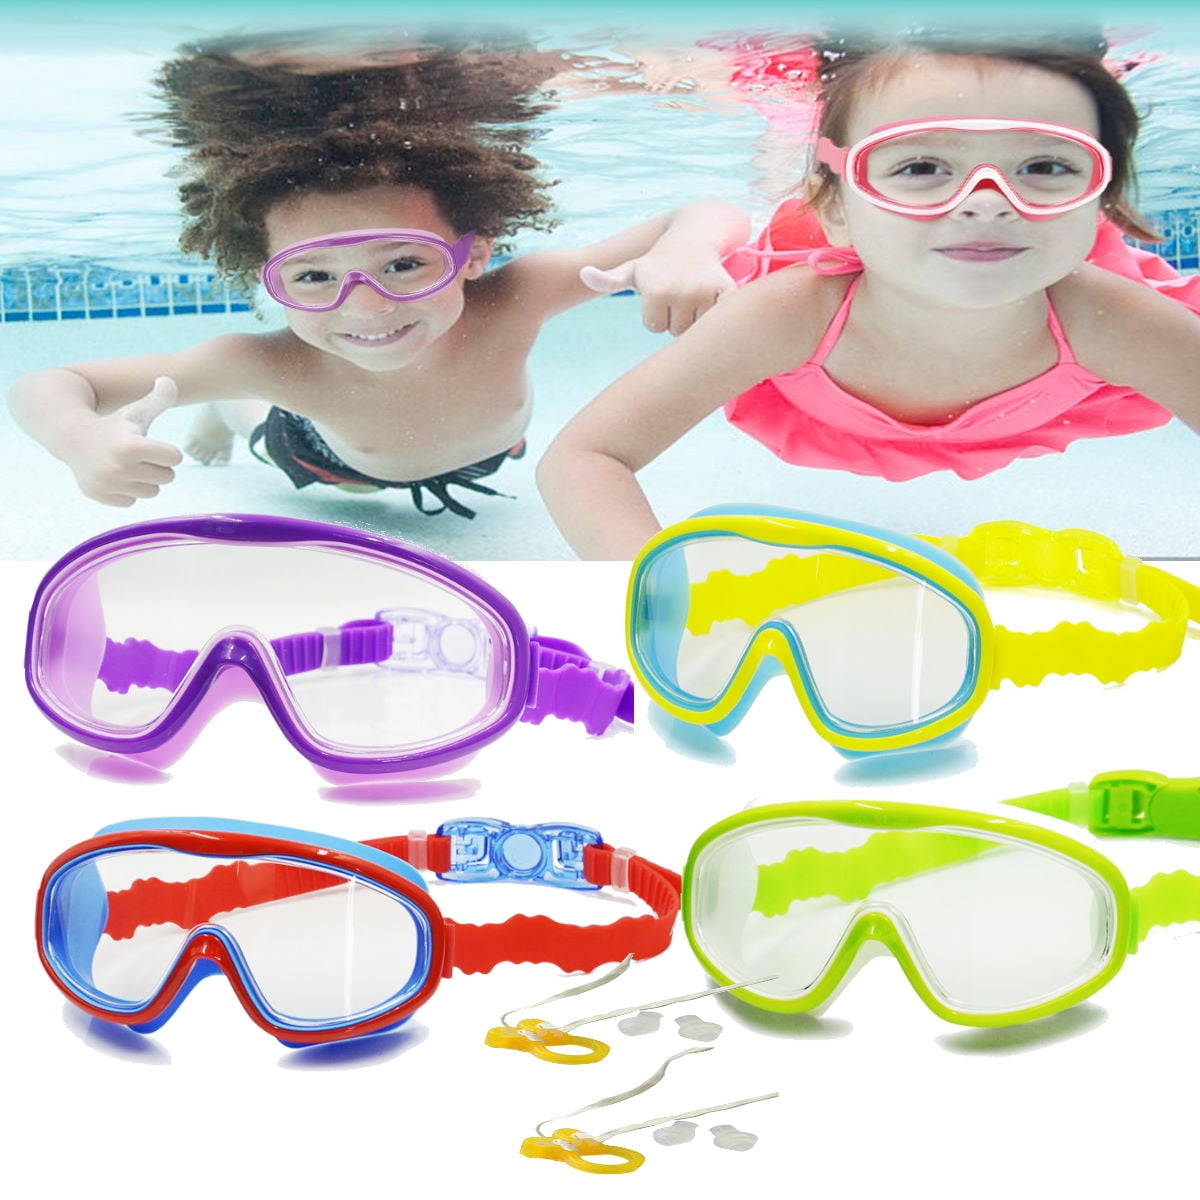 Safety First Splash-N-Swim Child-Sized Masks Goggles Assortment Set 4 